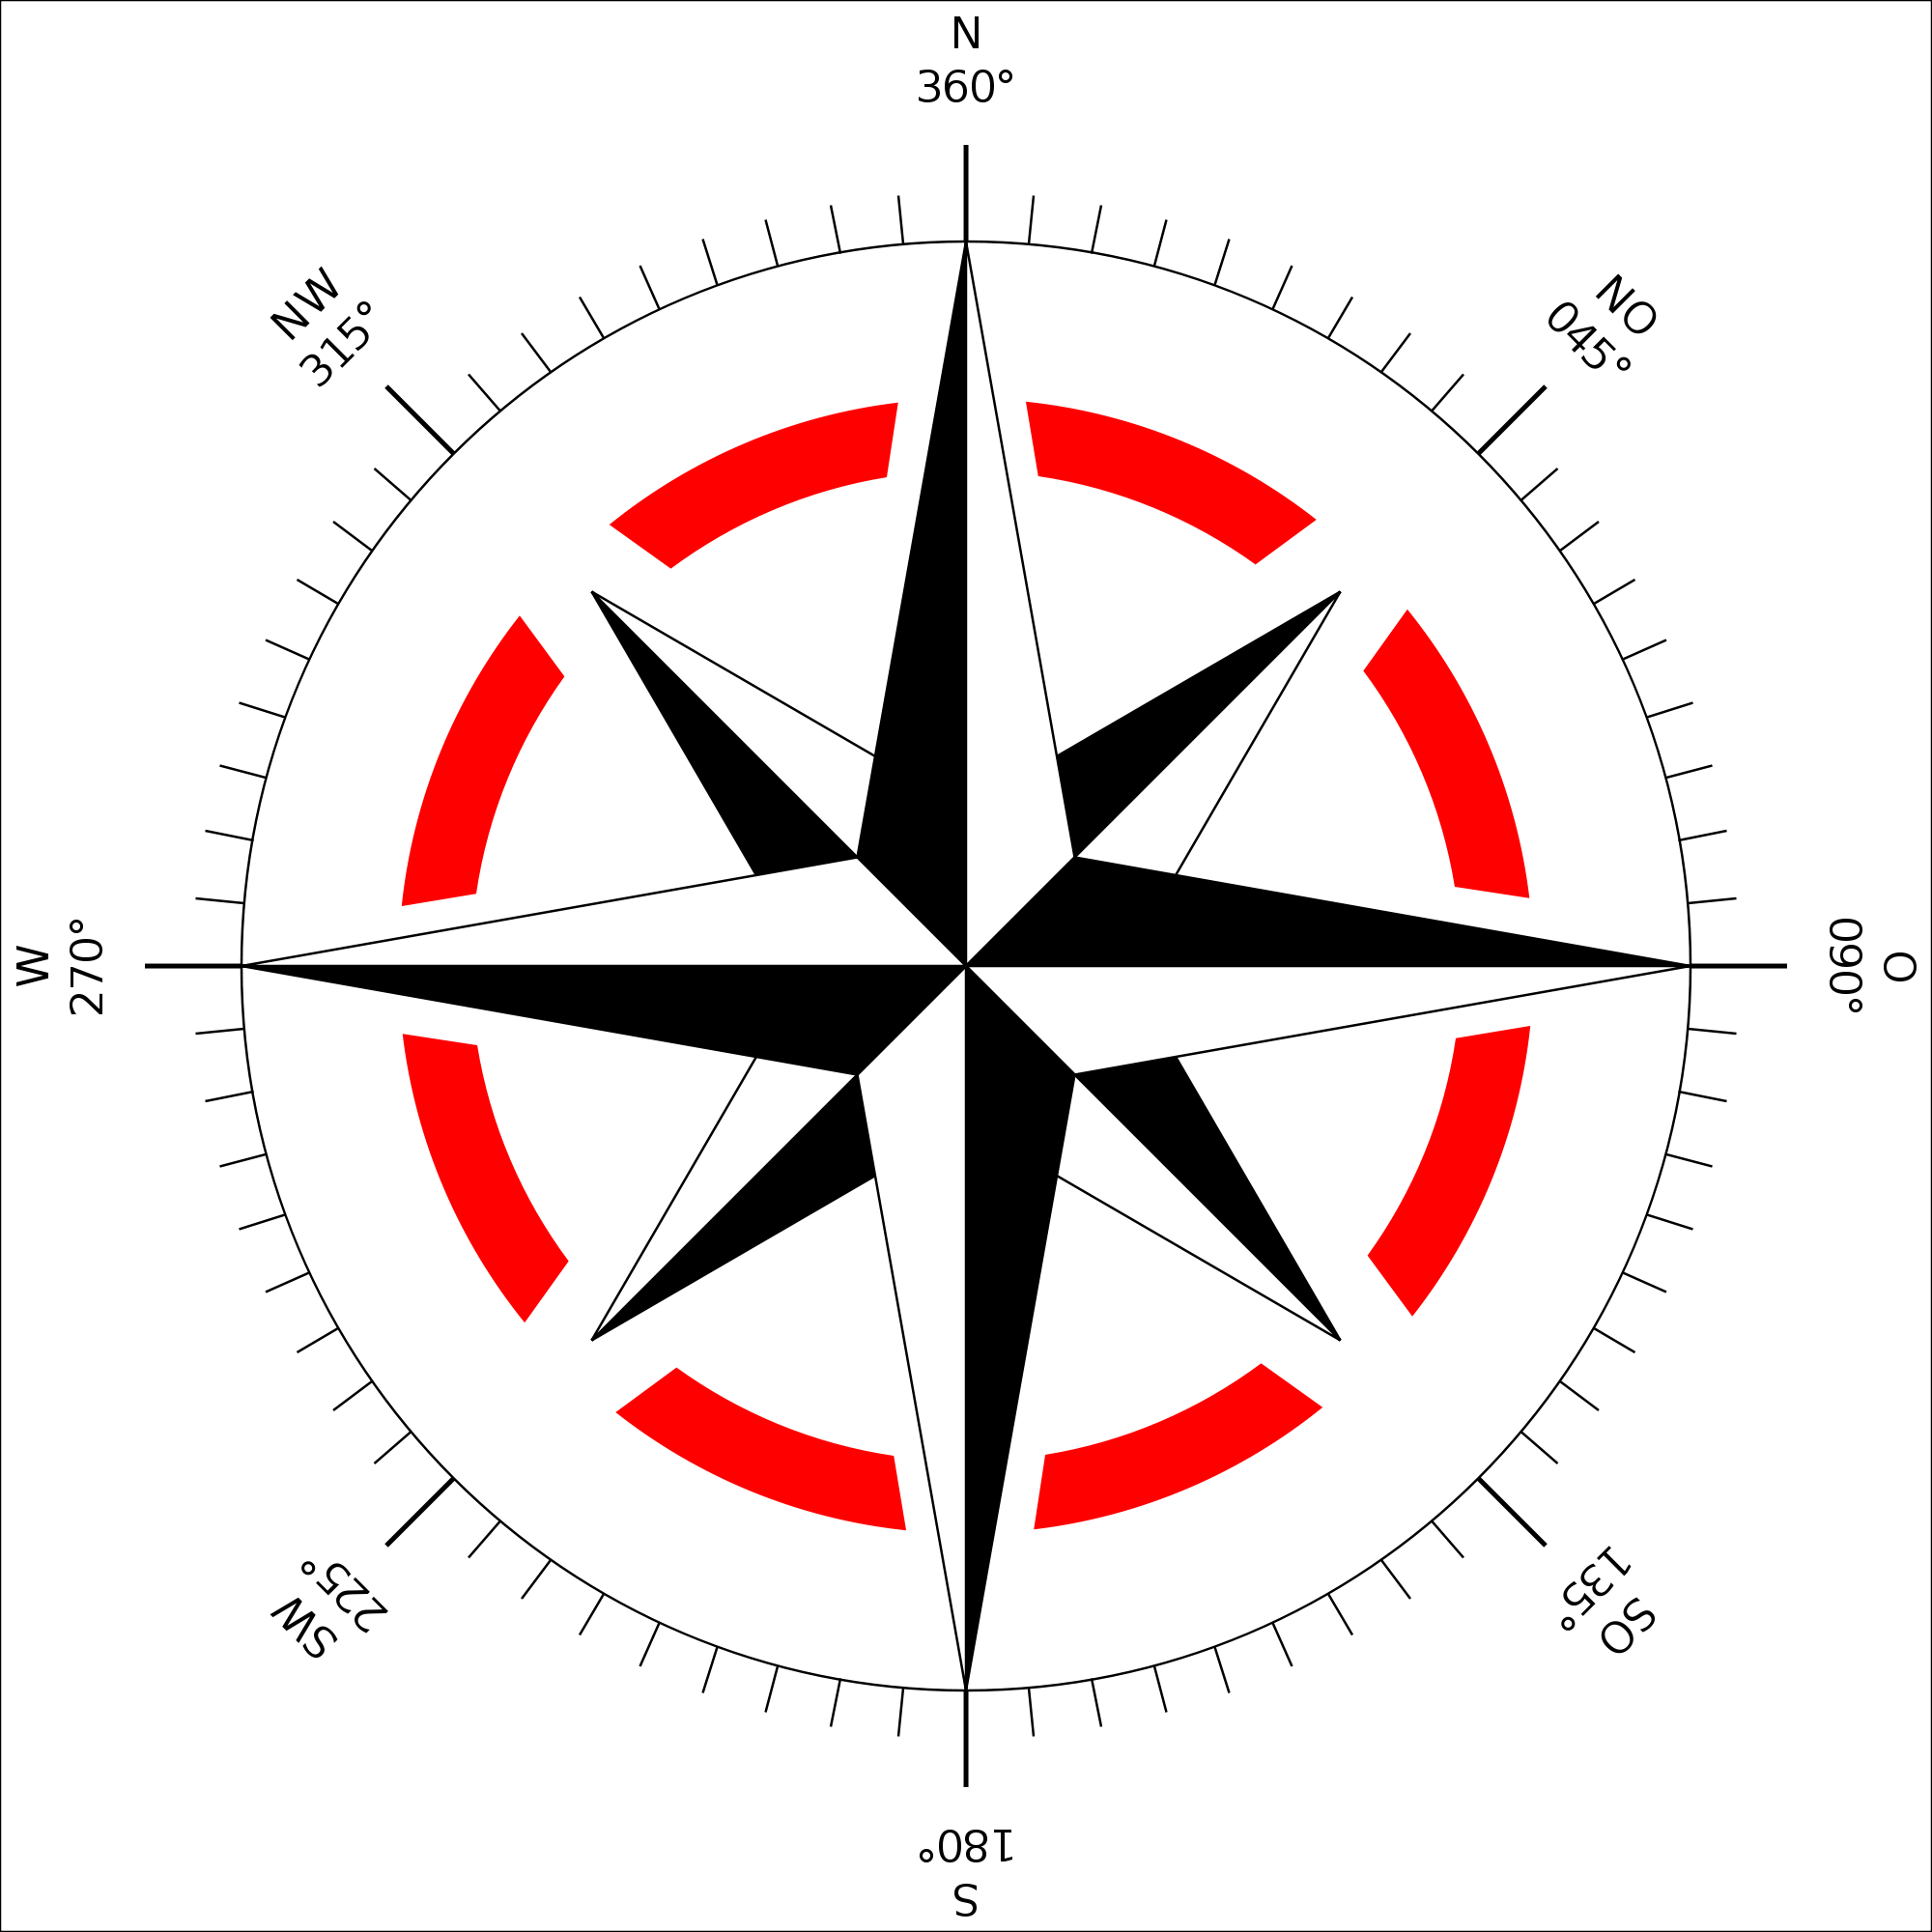 Compass rose - Wikipedia, the free encyclopedia